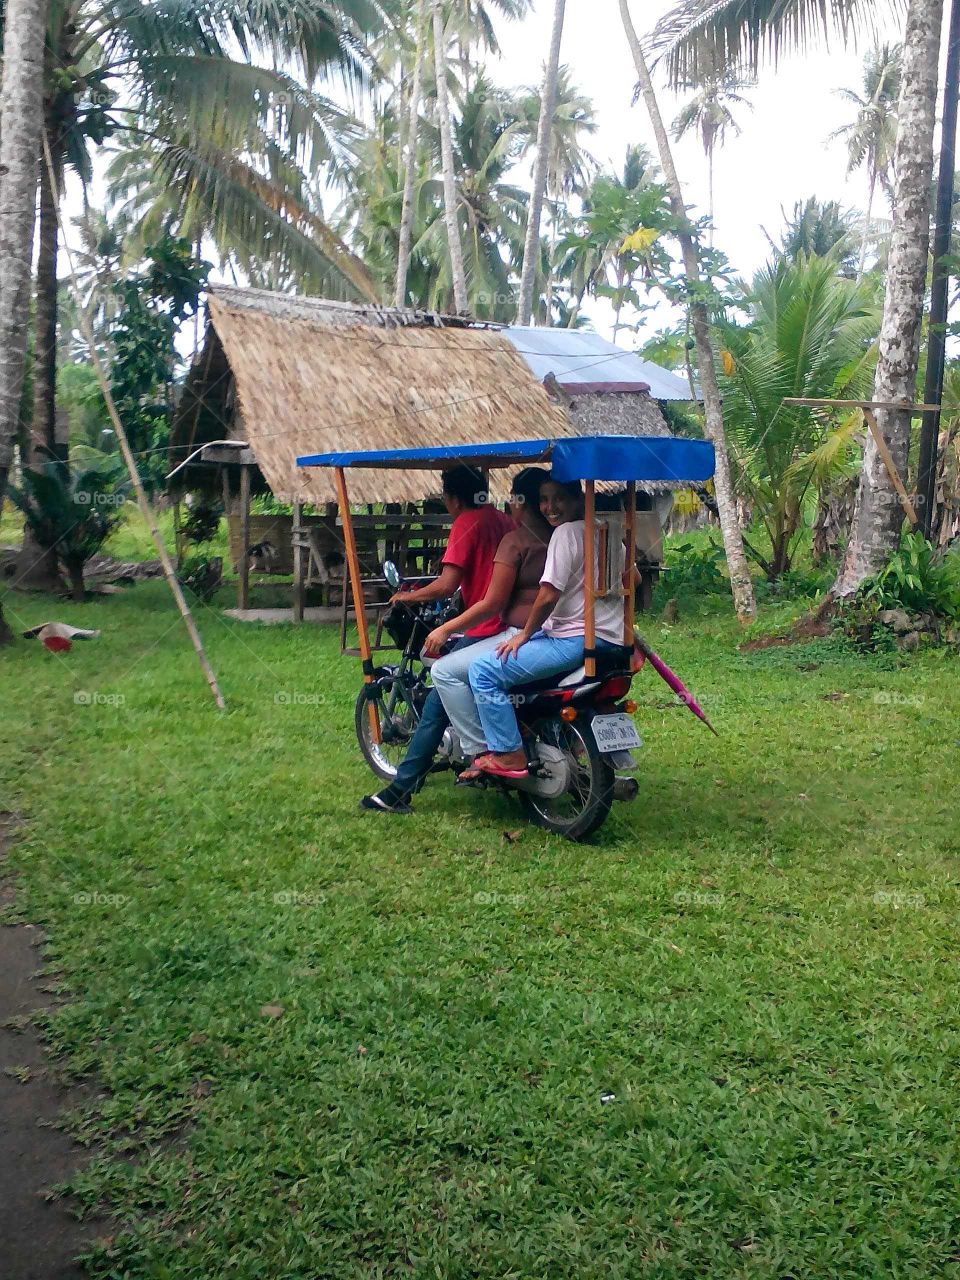 Mode of public transportation in the Philippines. Passenger bike.